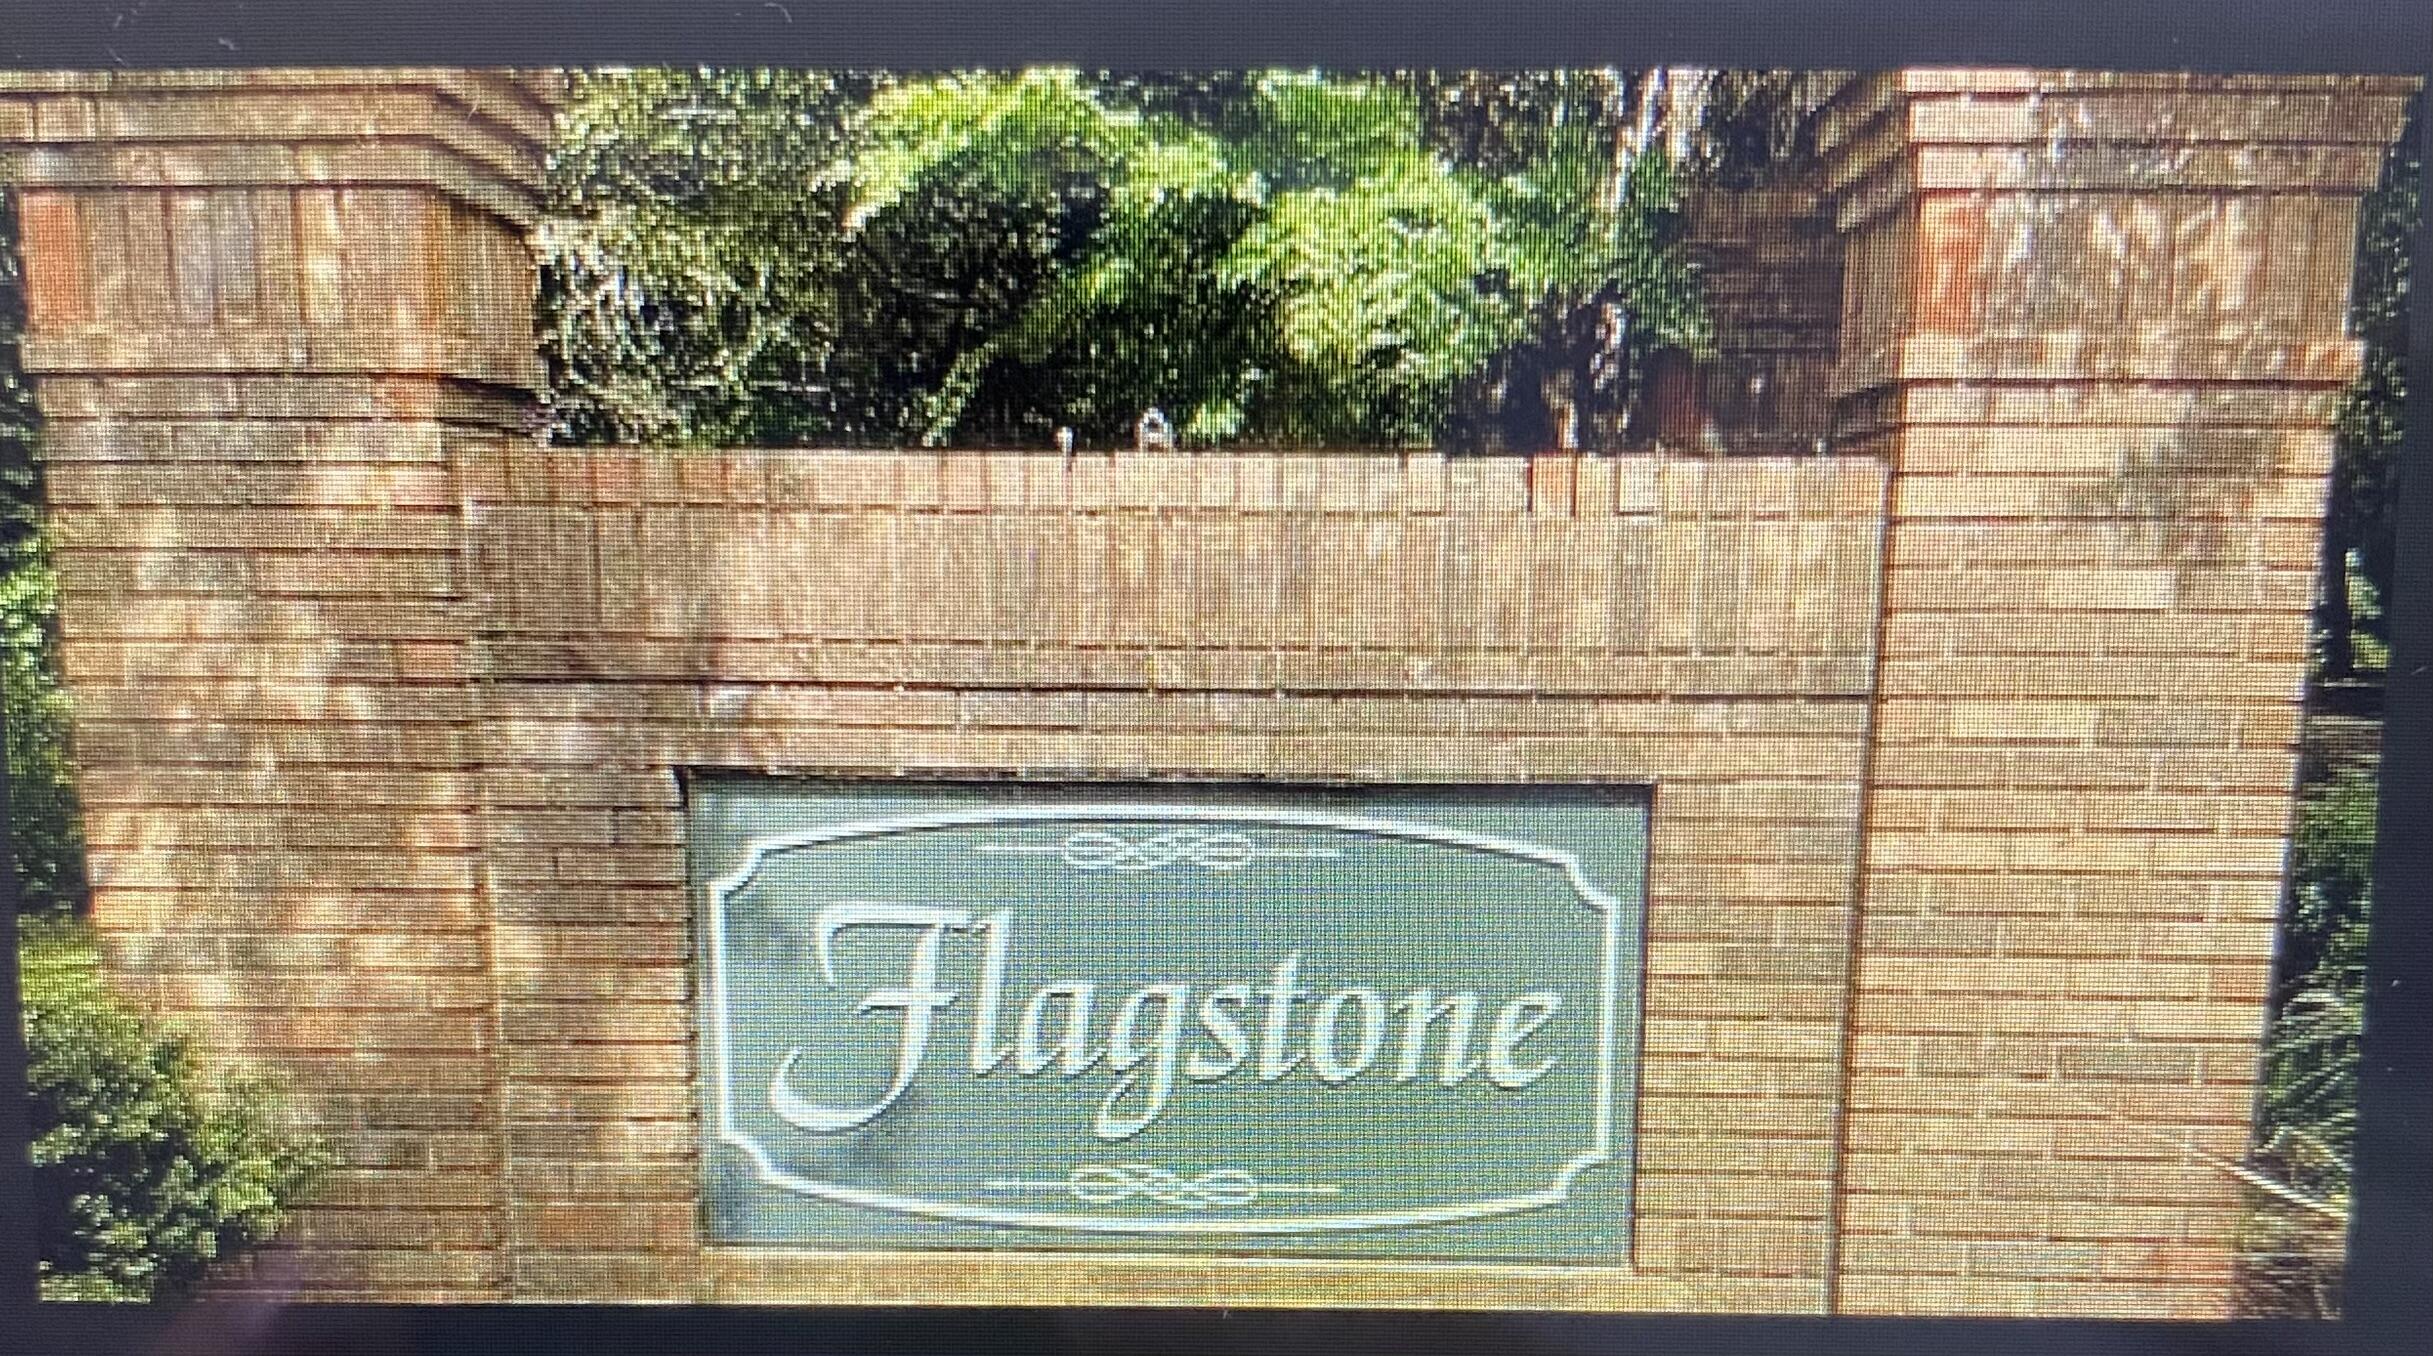 Flagstone Subdivision